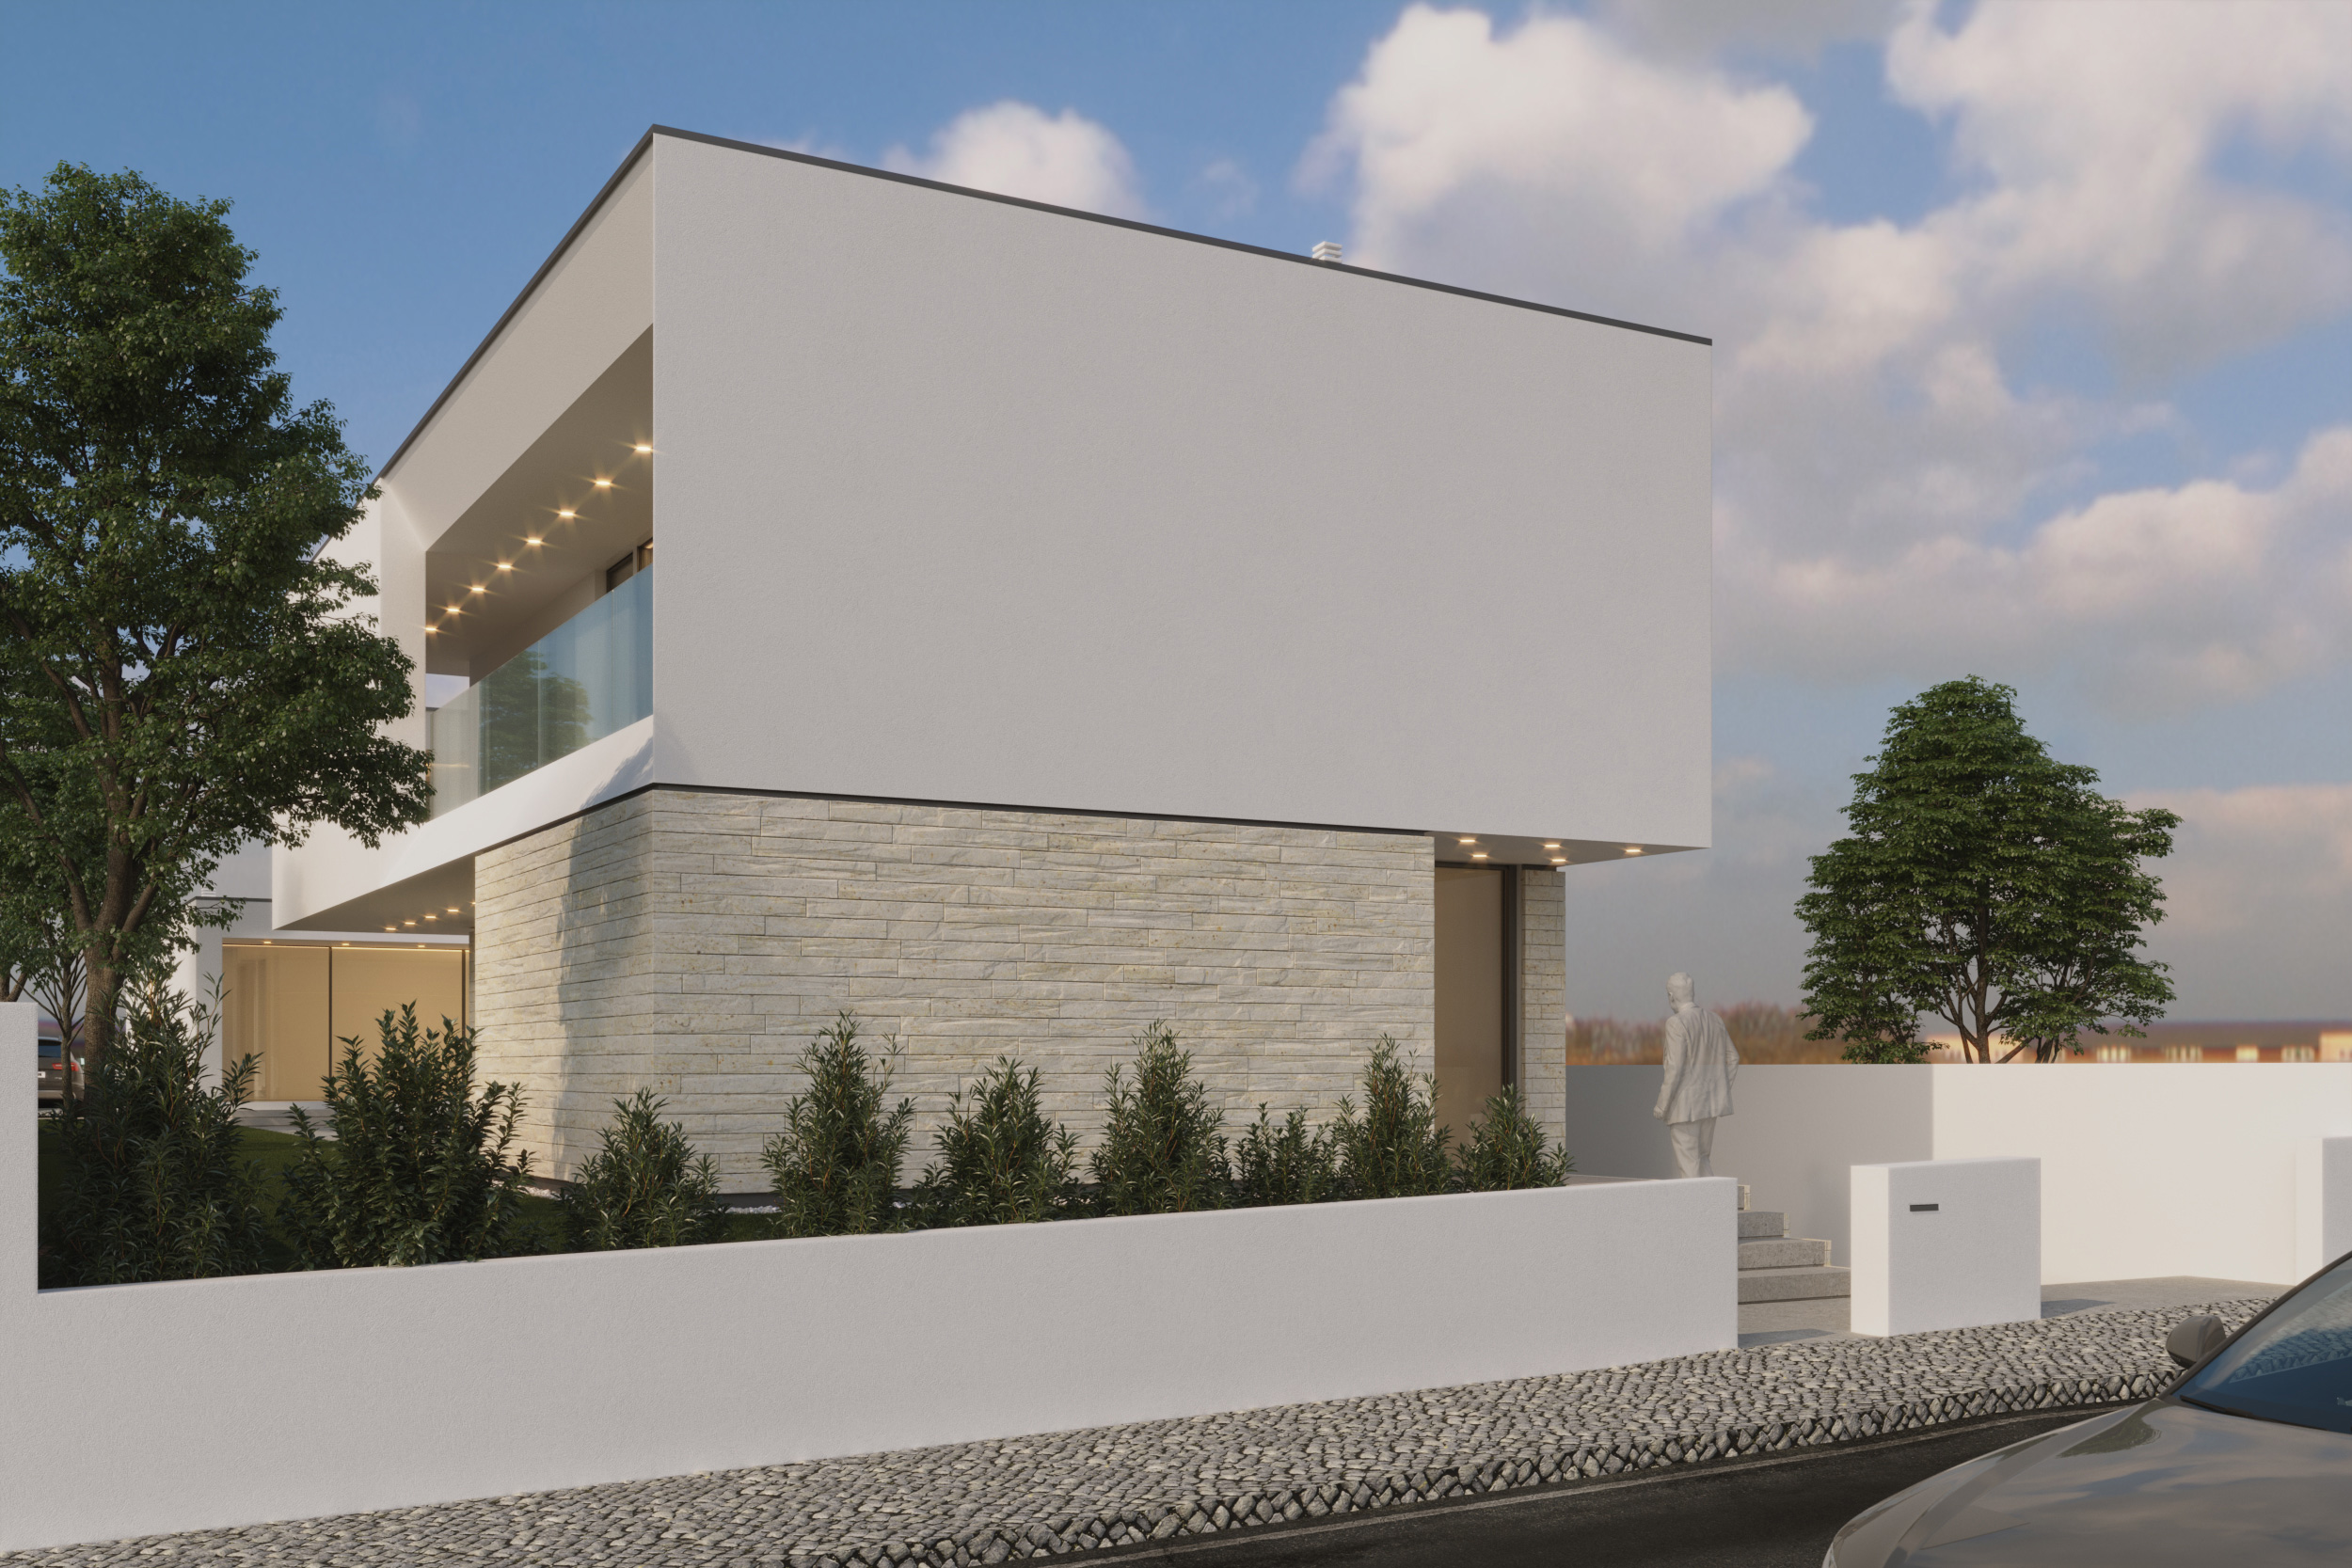 House exterior visualisation